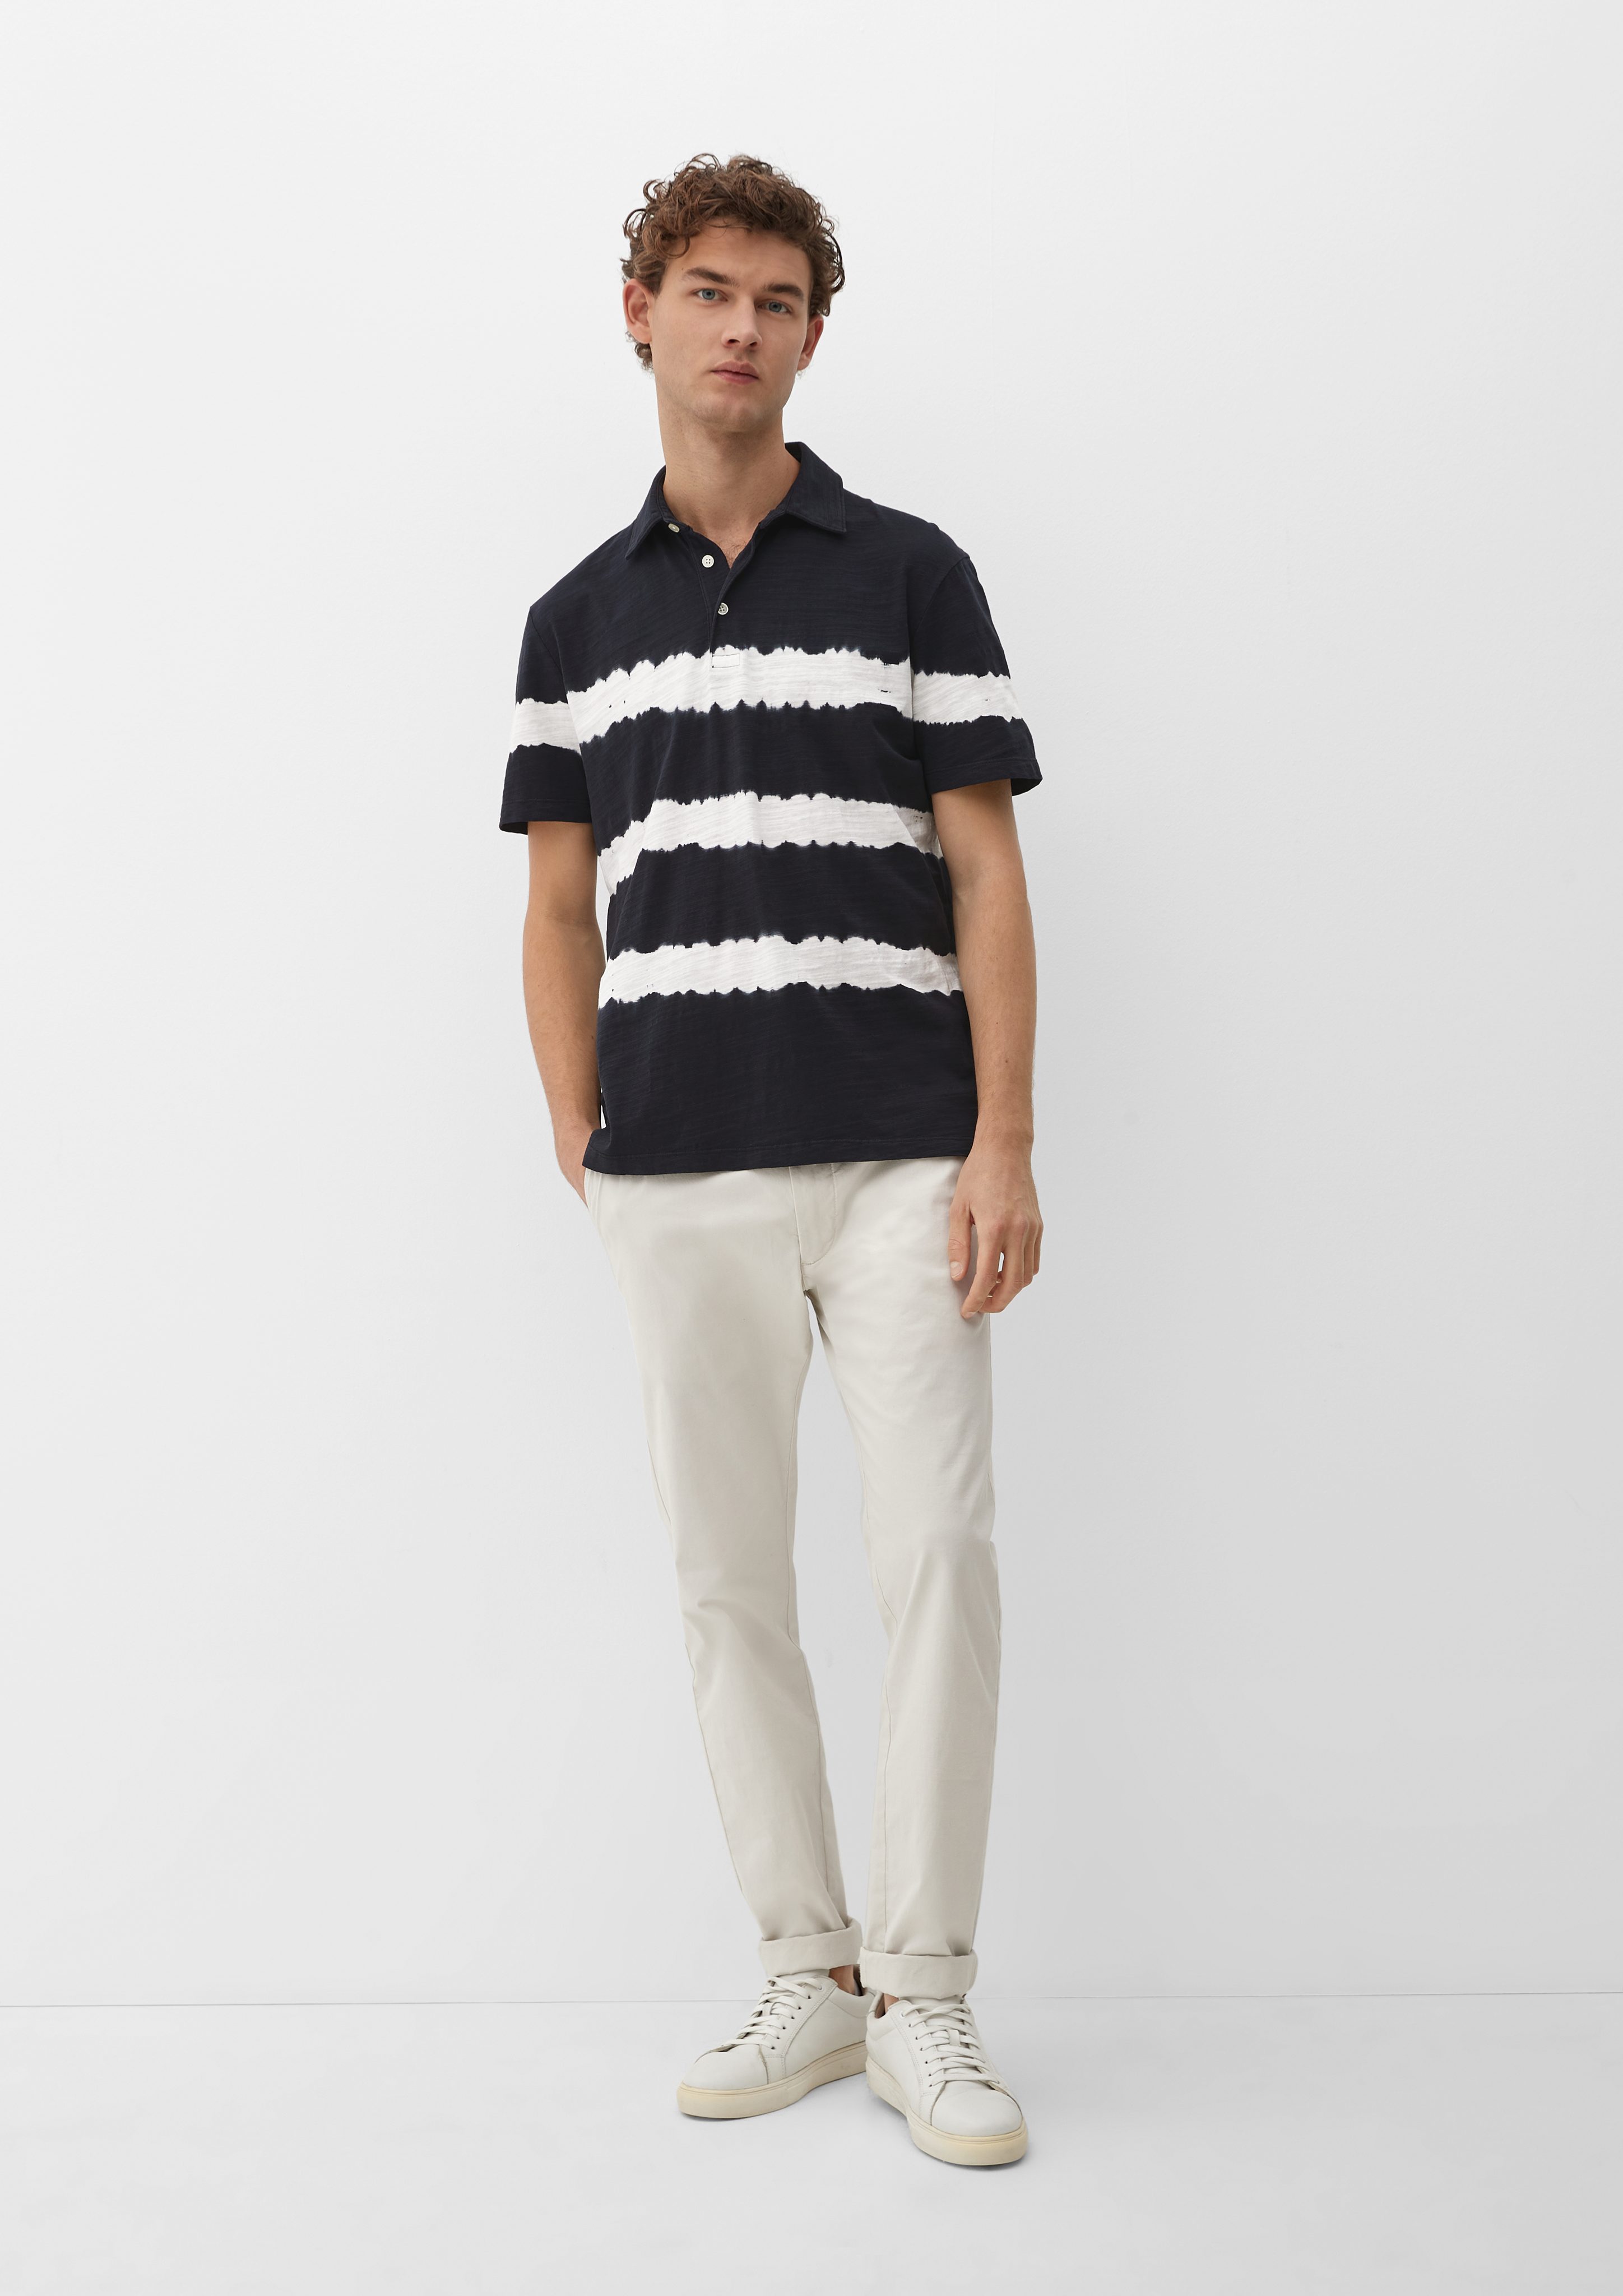 s.Oliver Kurzarmshirt Poloshirt Batik-Look Dye Garment im schwarz